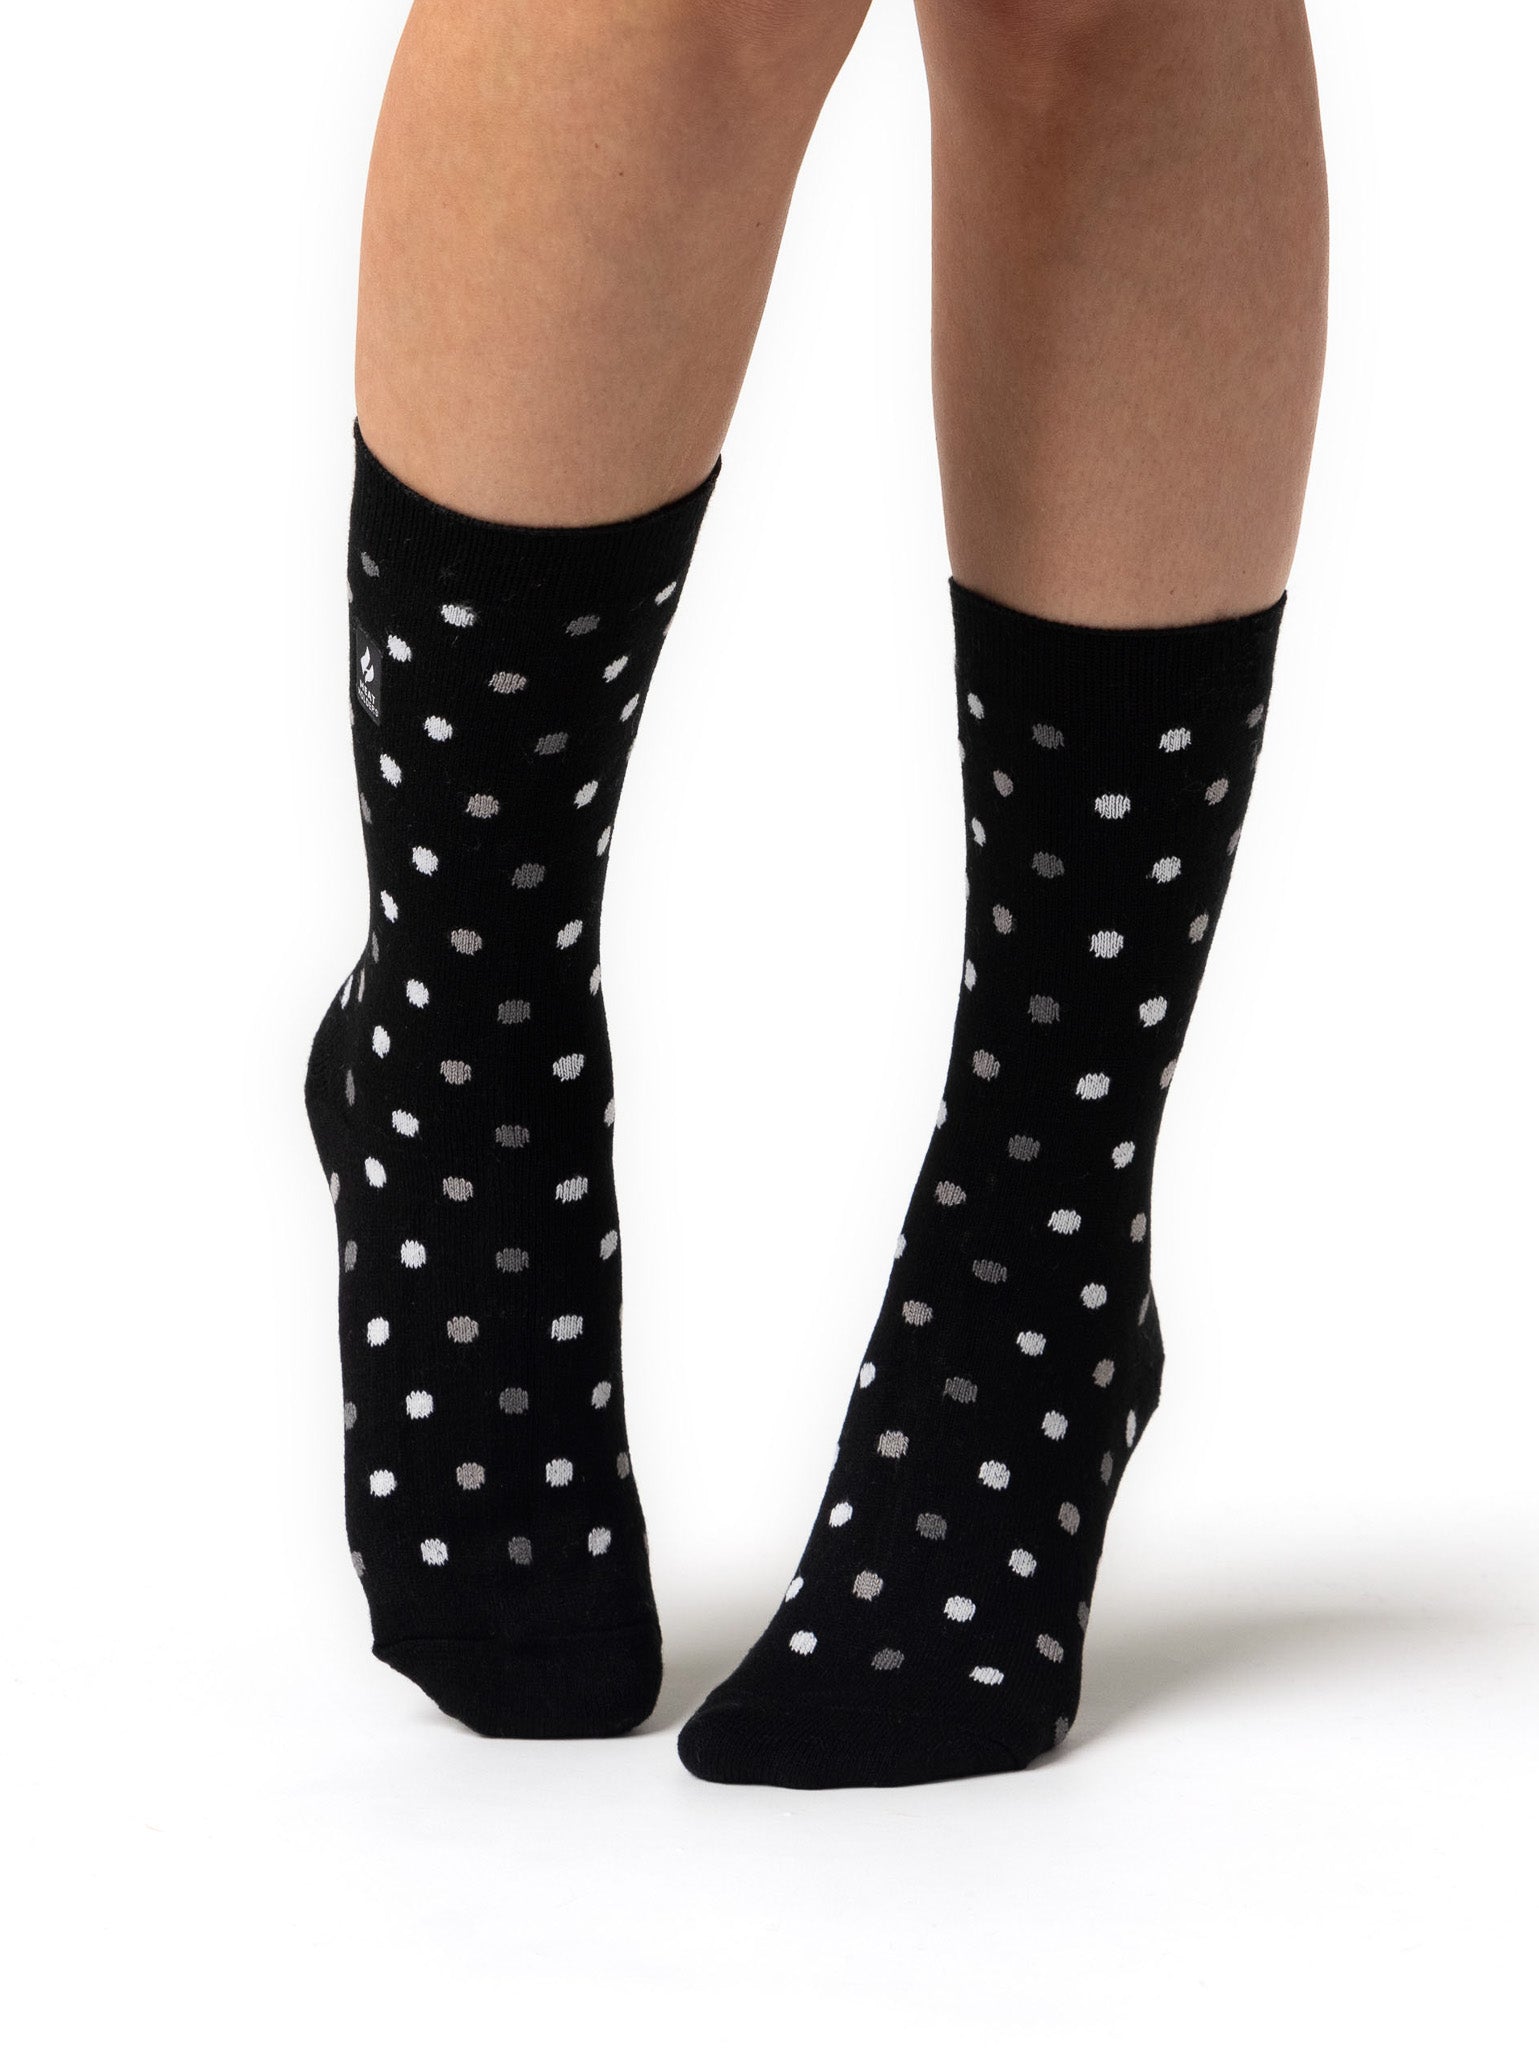 HEAT HOLDERS Ultimate Ultra Lite Thermal Socks - Women's Bigfoot